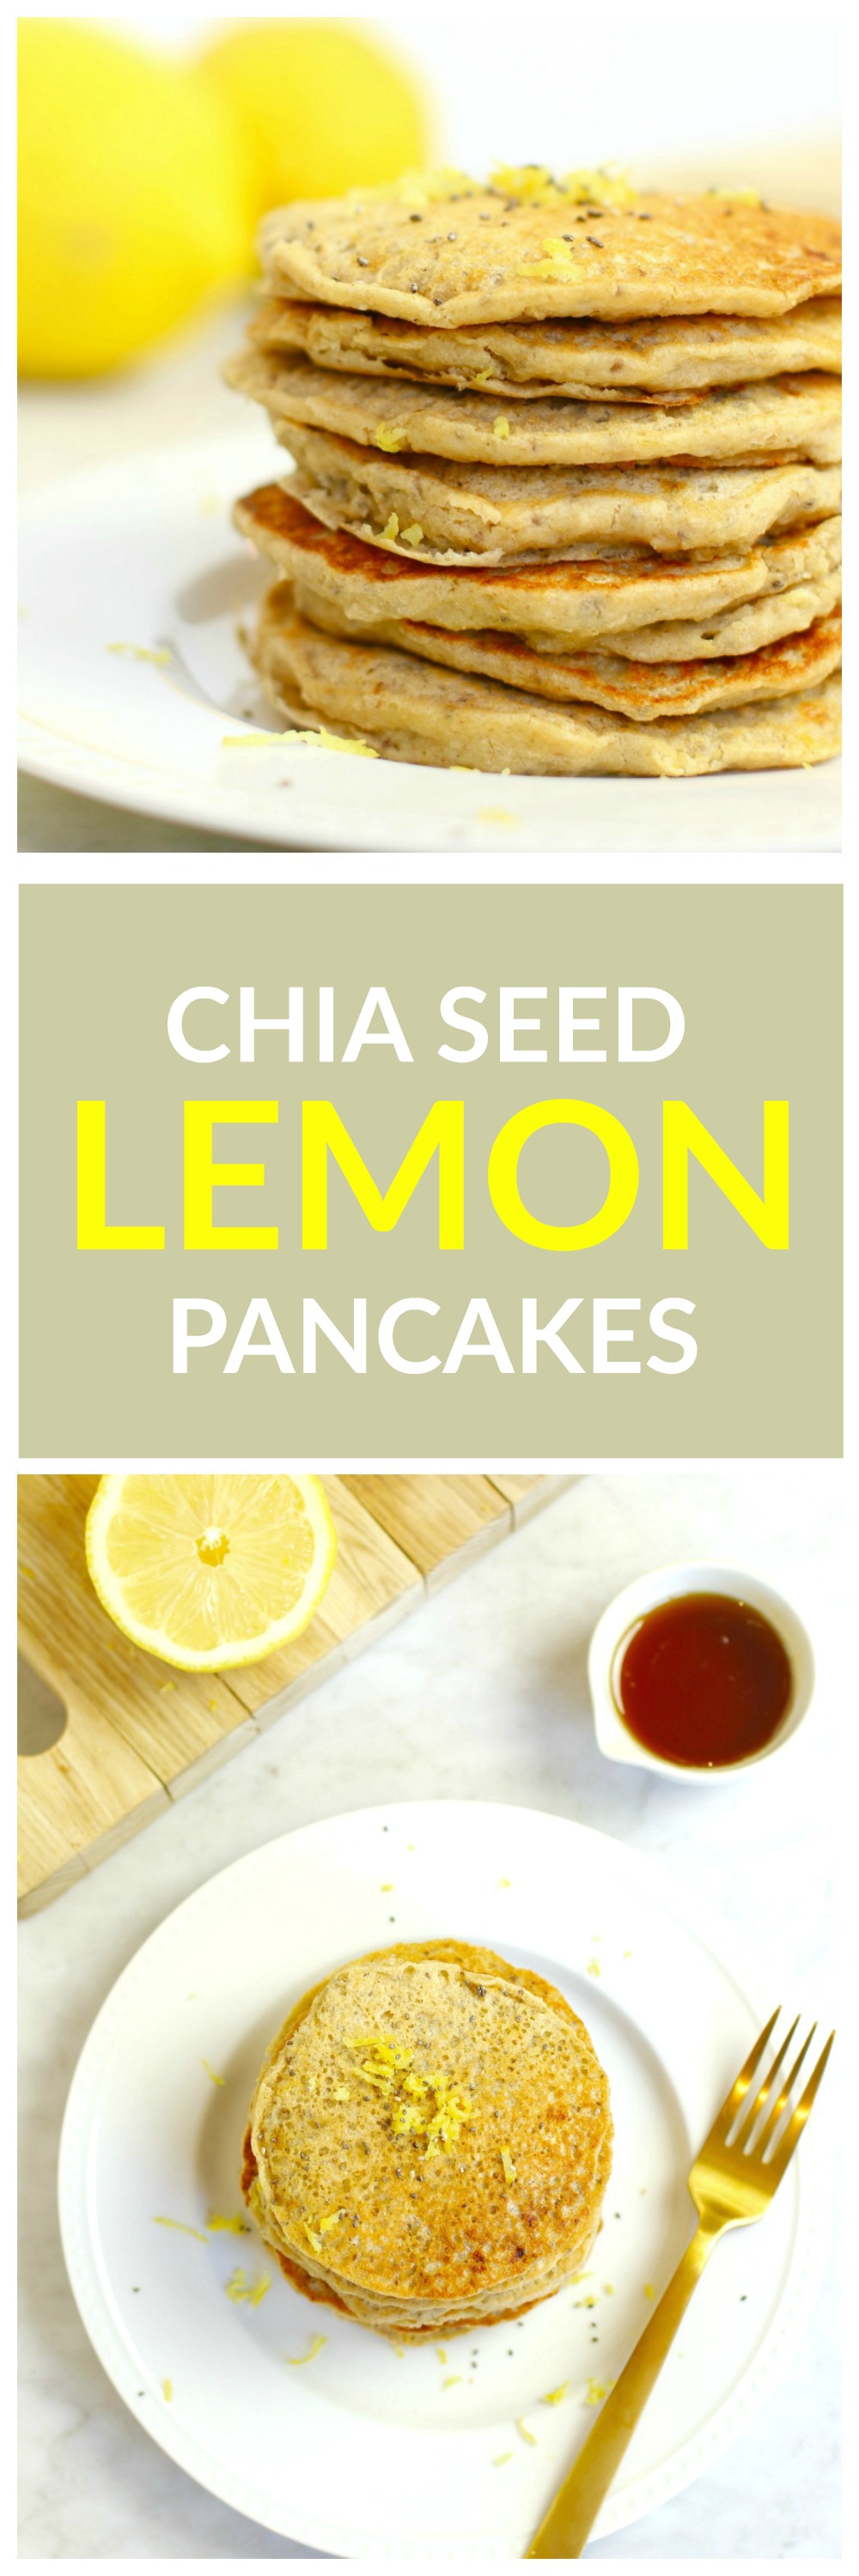 Lemon Chia Pancakes - gluten-free and vegan. Made with fresh lemons and lemon juice. A delicious summer brunch recipe. #pancakes #healthy #healthypancakes